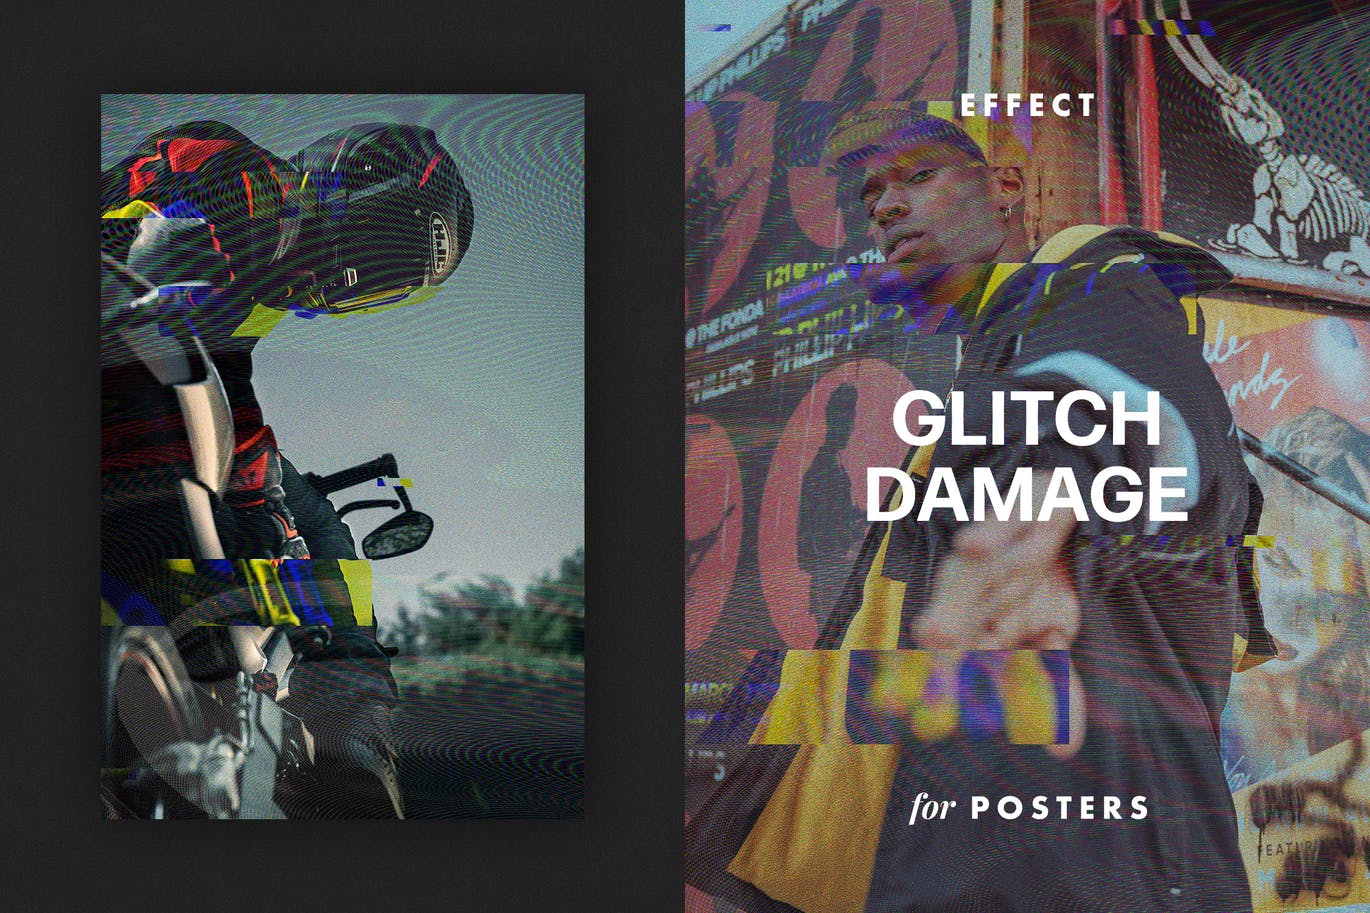 故障损坏效果海报模板 Glitch Damage Effect for Posters 插件预设 第1张